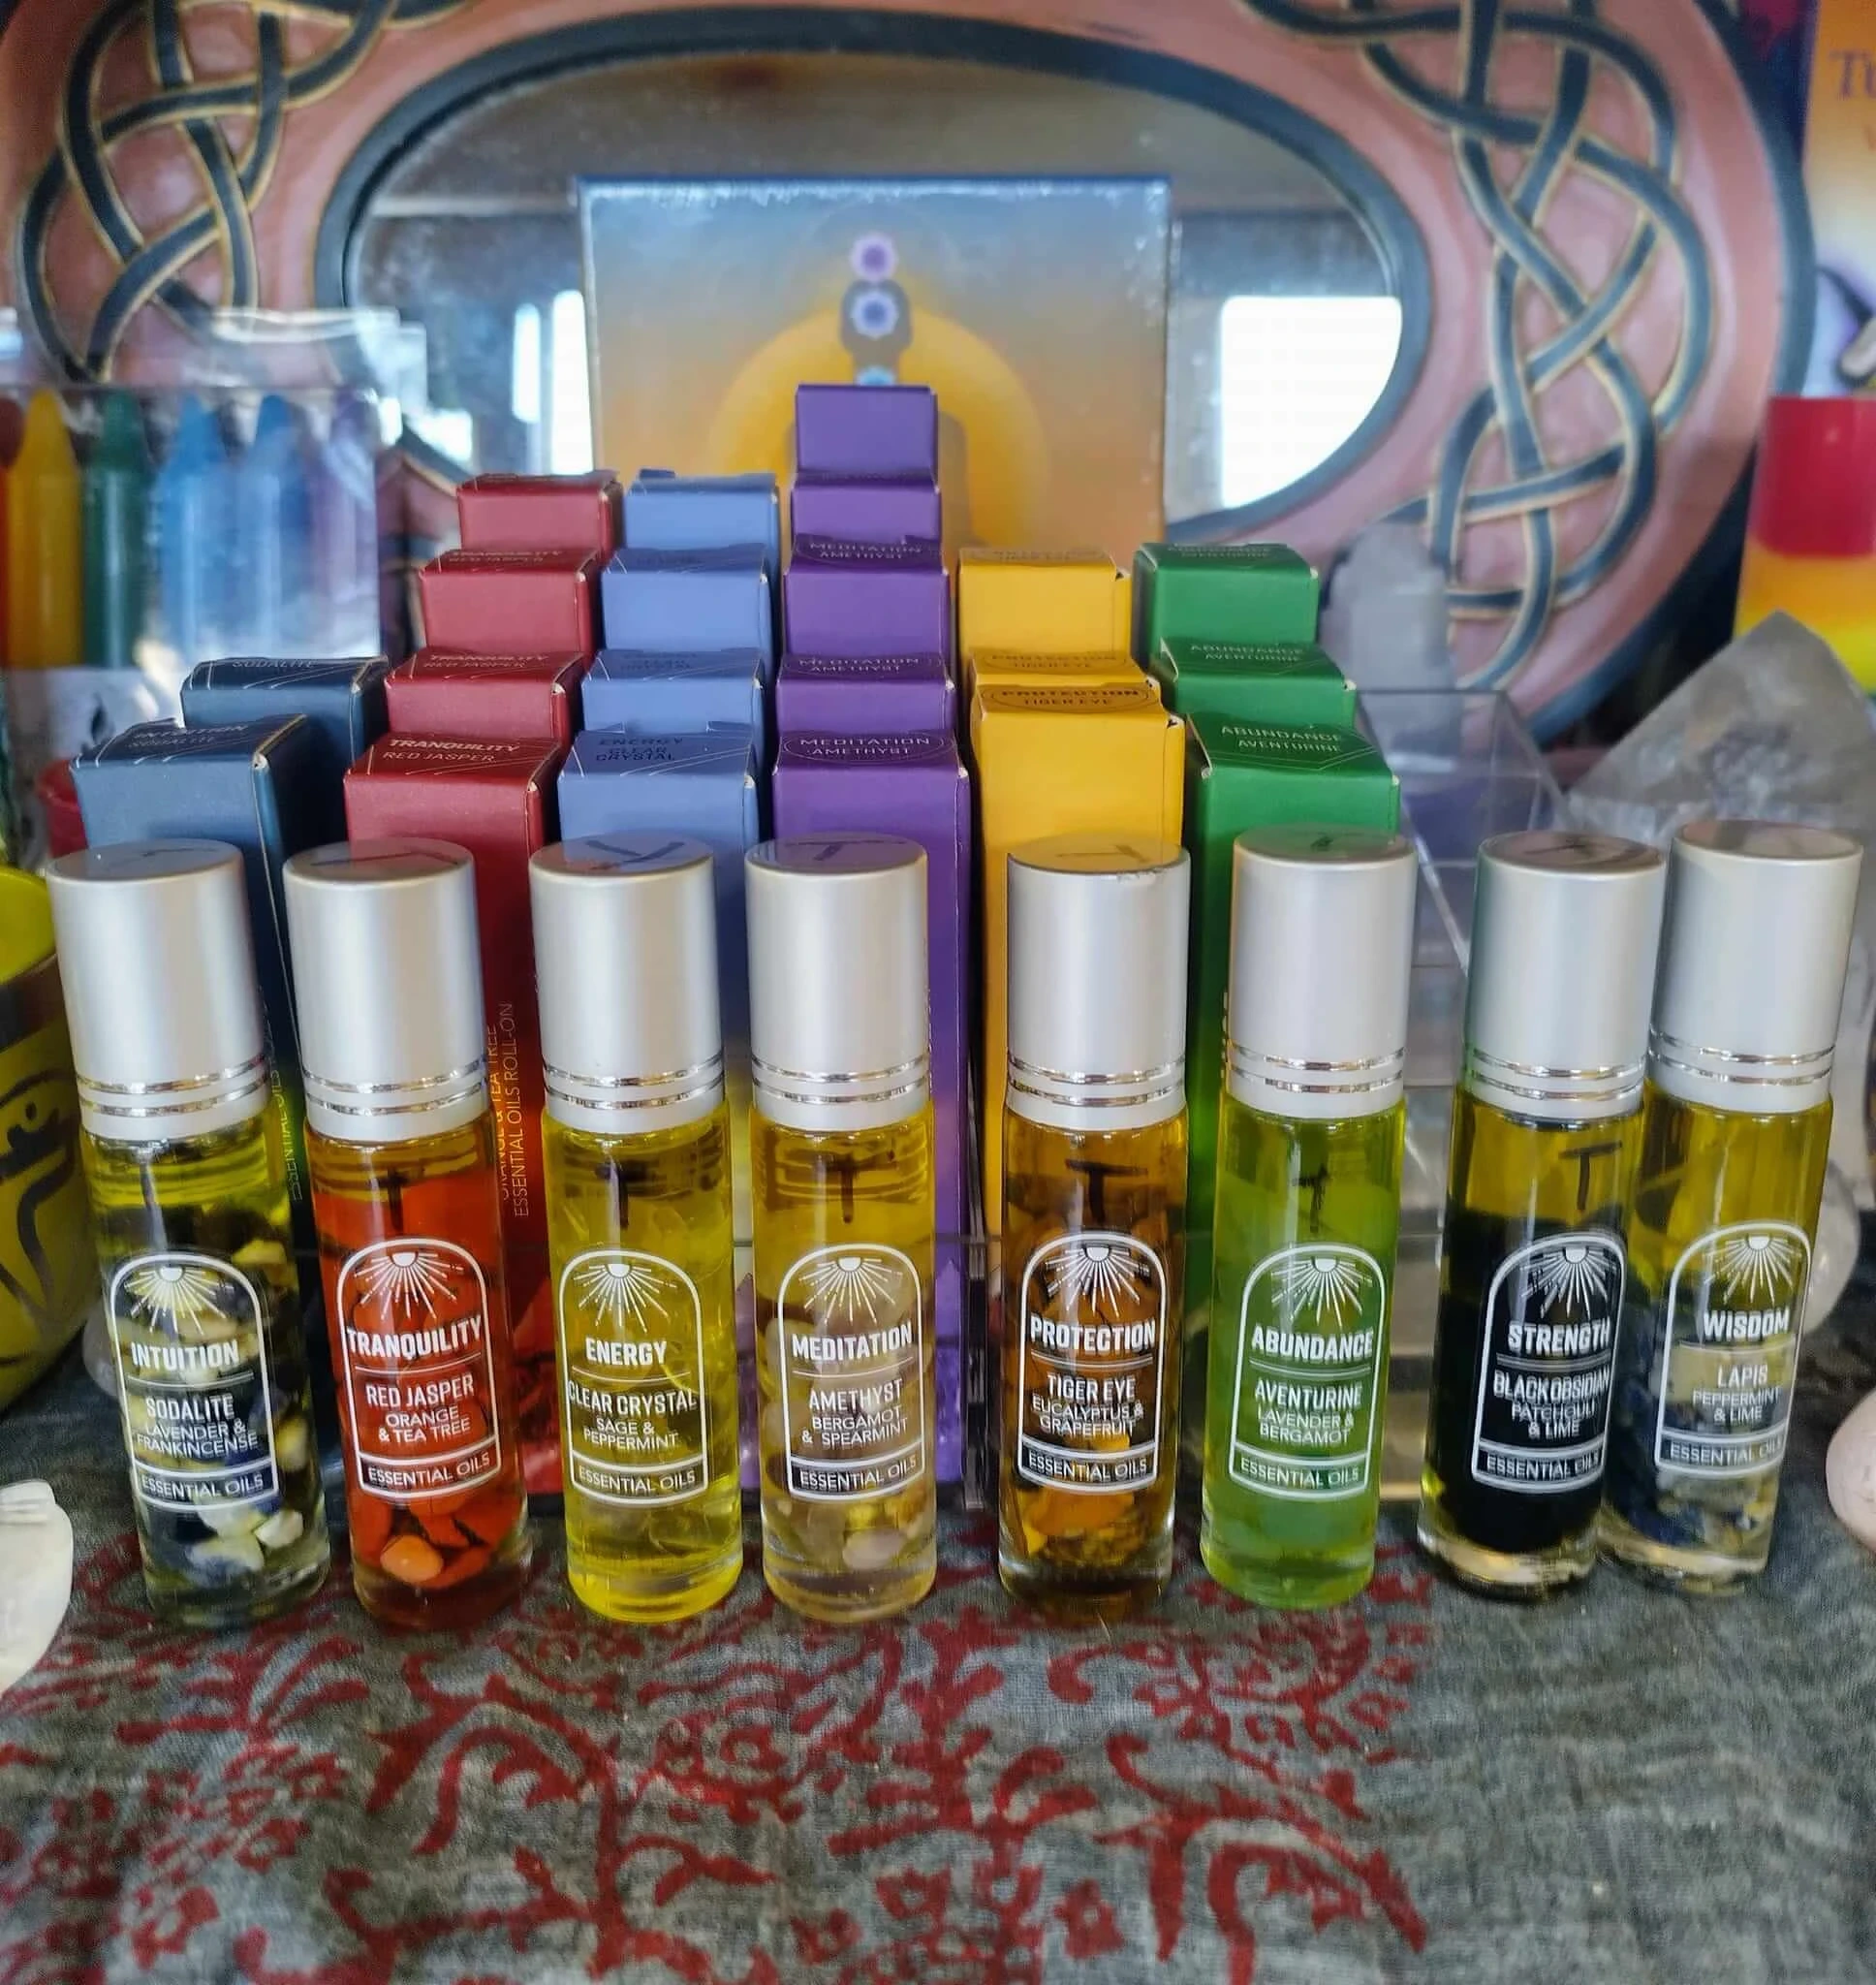 A display of perfume oils